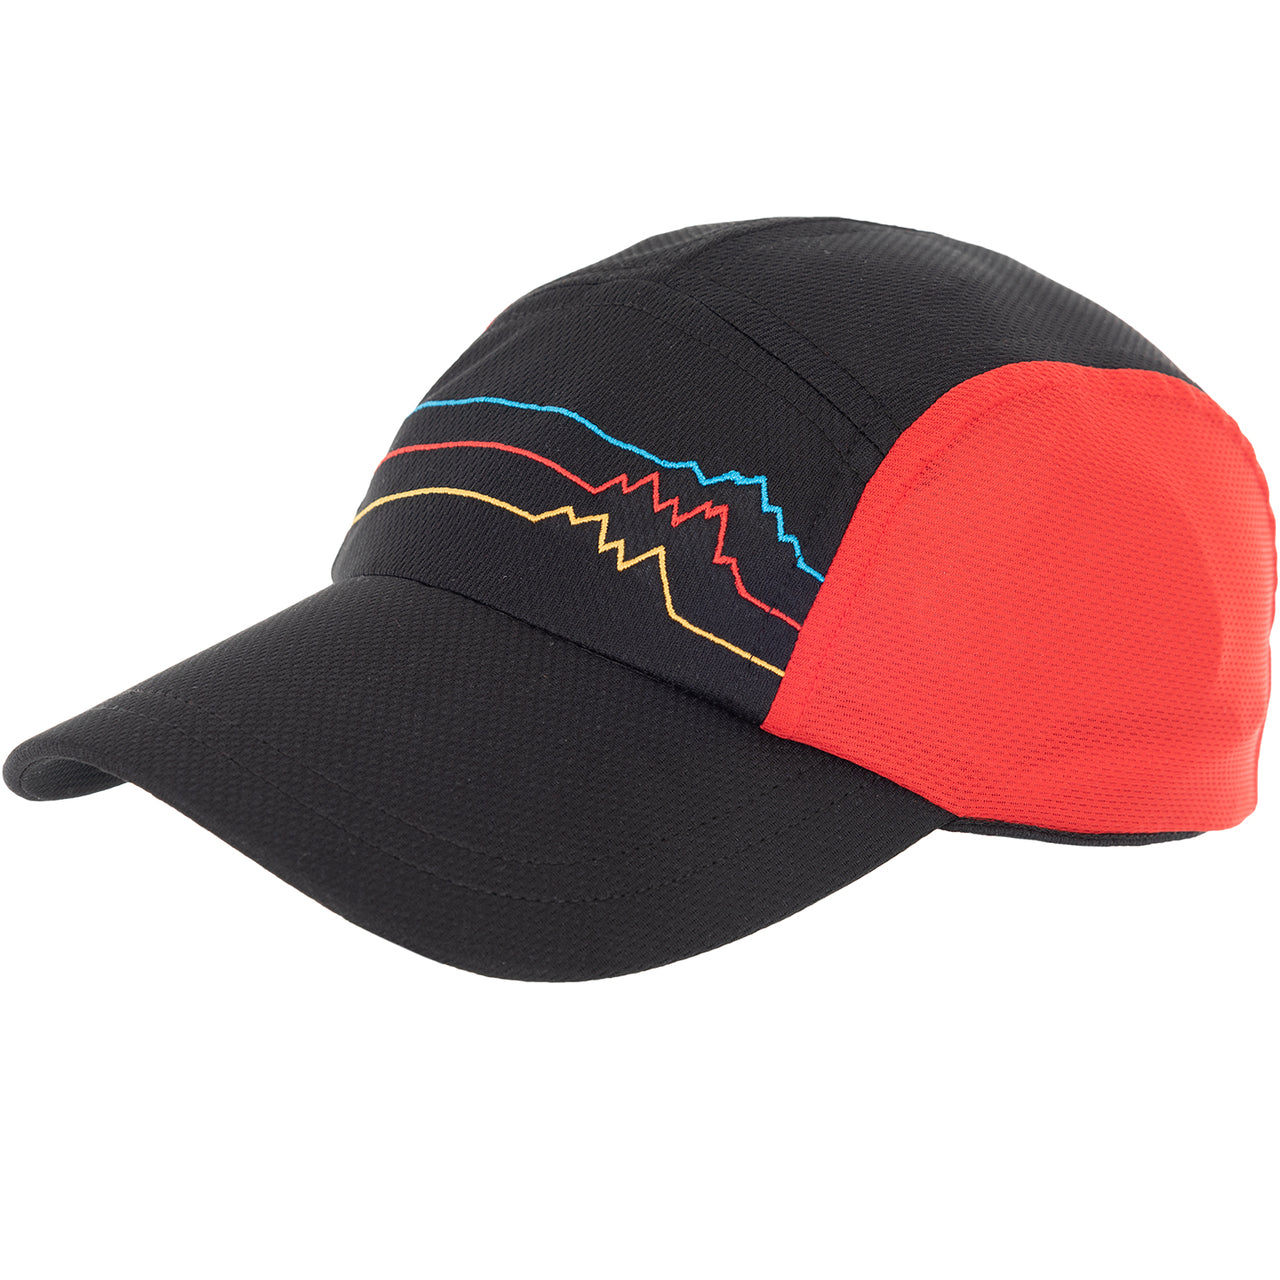 Race Hat | Mountains-Headsweats